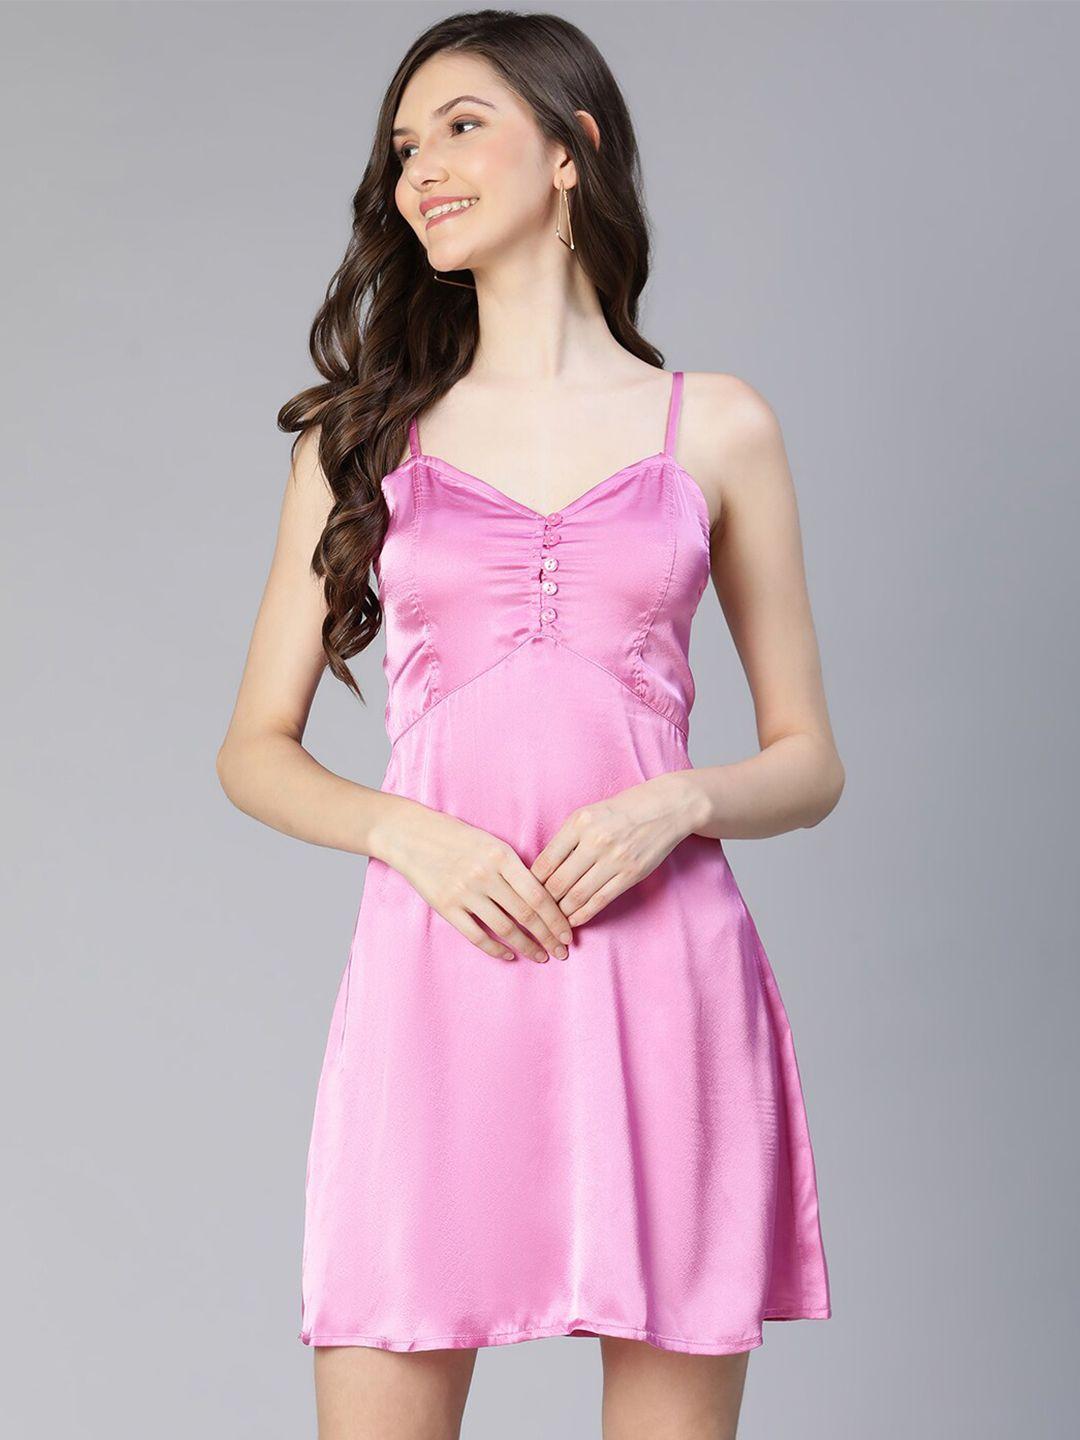 oxolloxo-women-pink-solid-shoulder-straps-satin-mini-dress